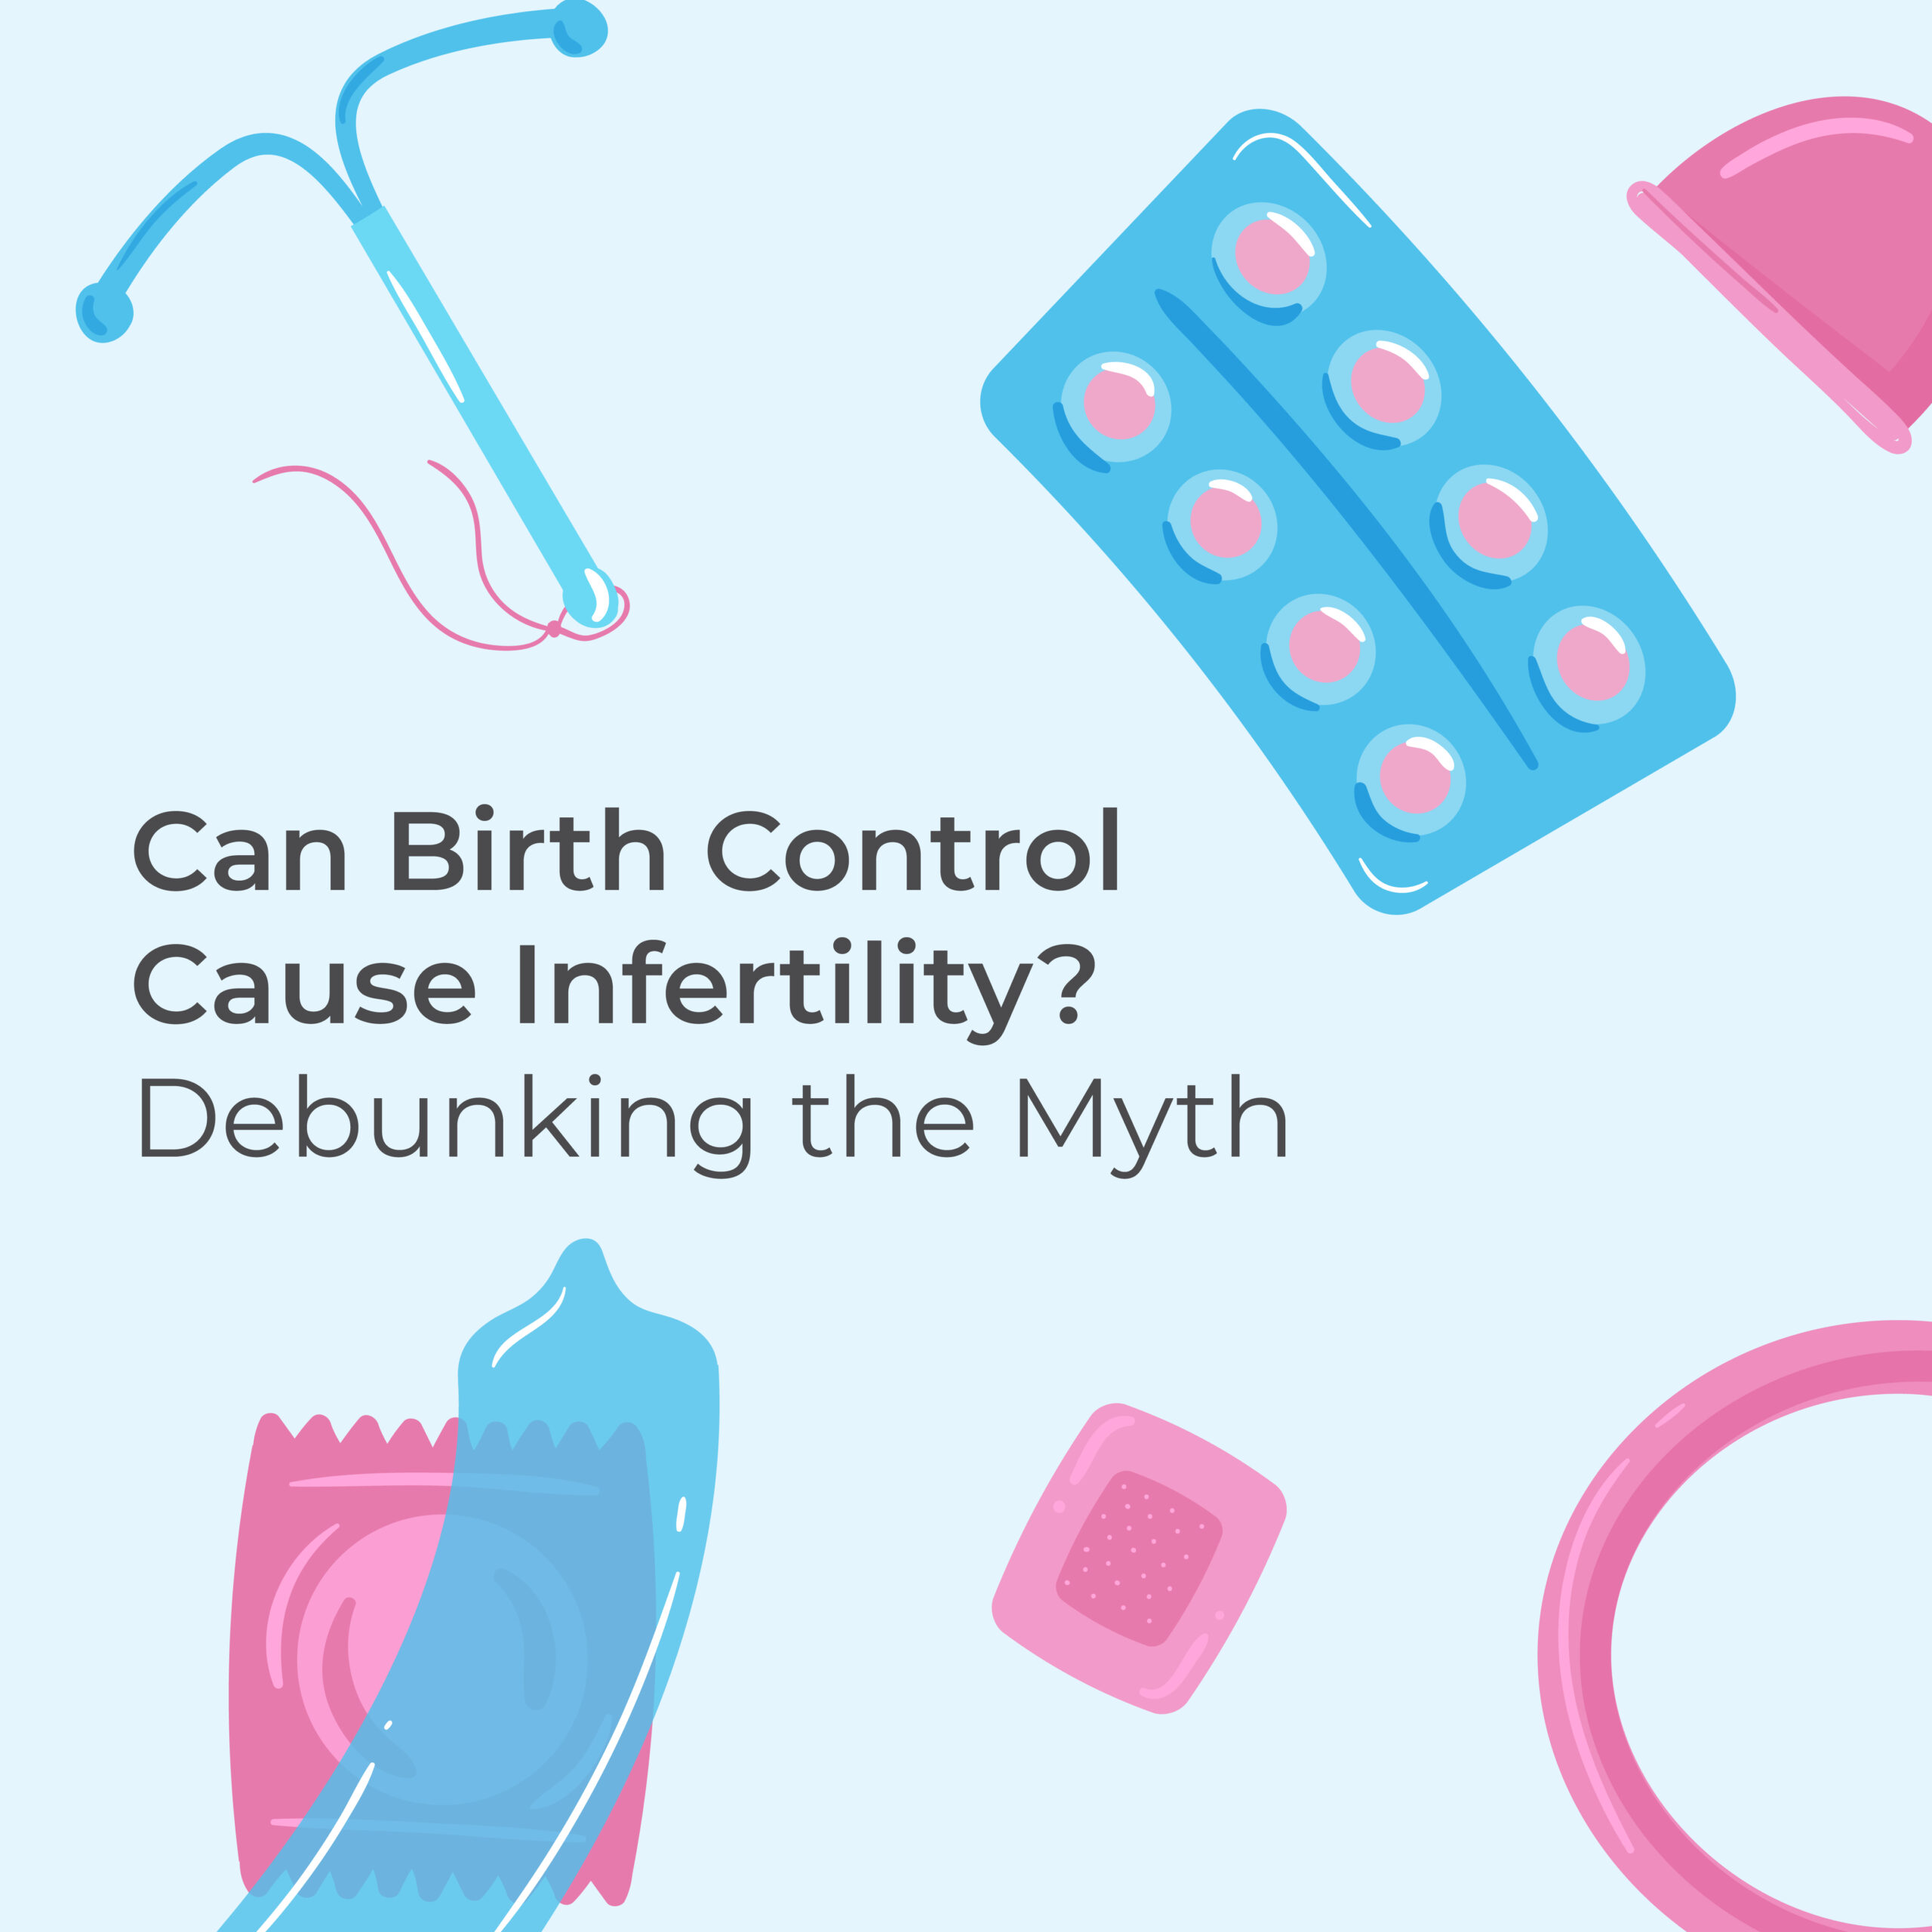 Can Birth Control Cause Infertility? | Fertility Cloud